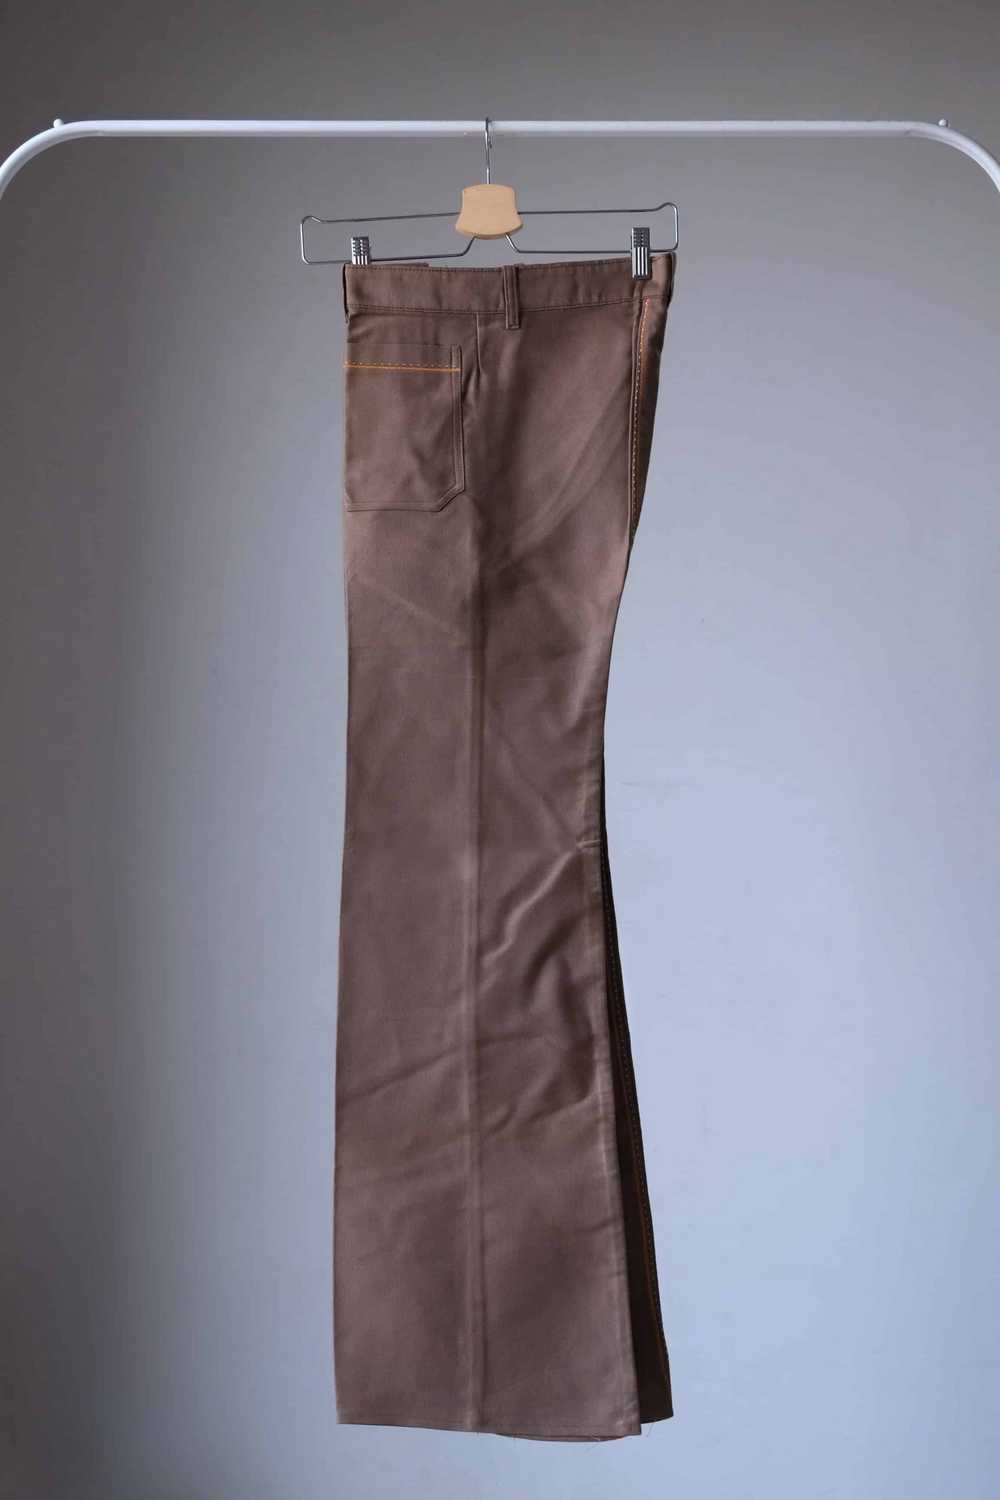 LUCKY PARIS 70's Vintage Flared Pants - image 2